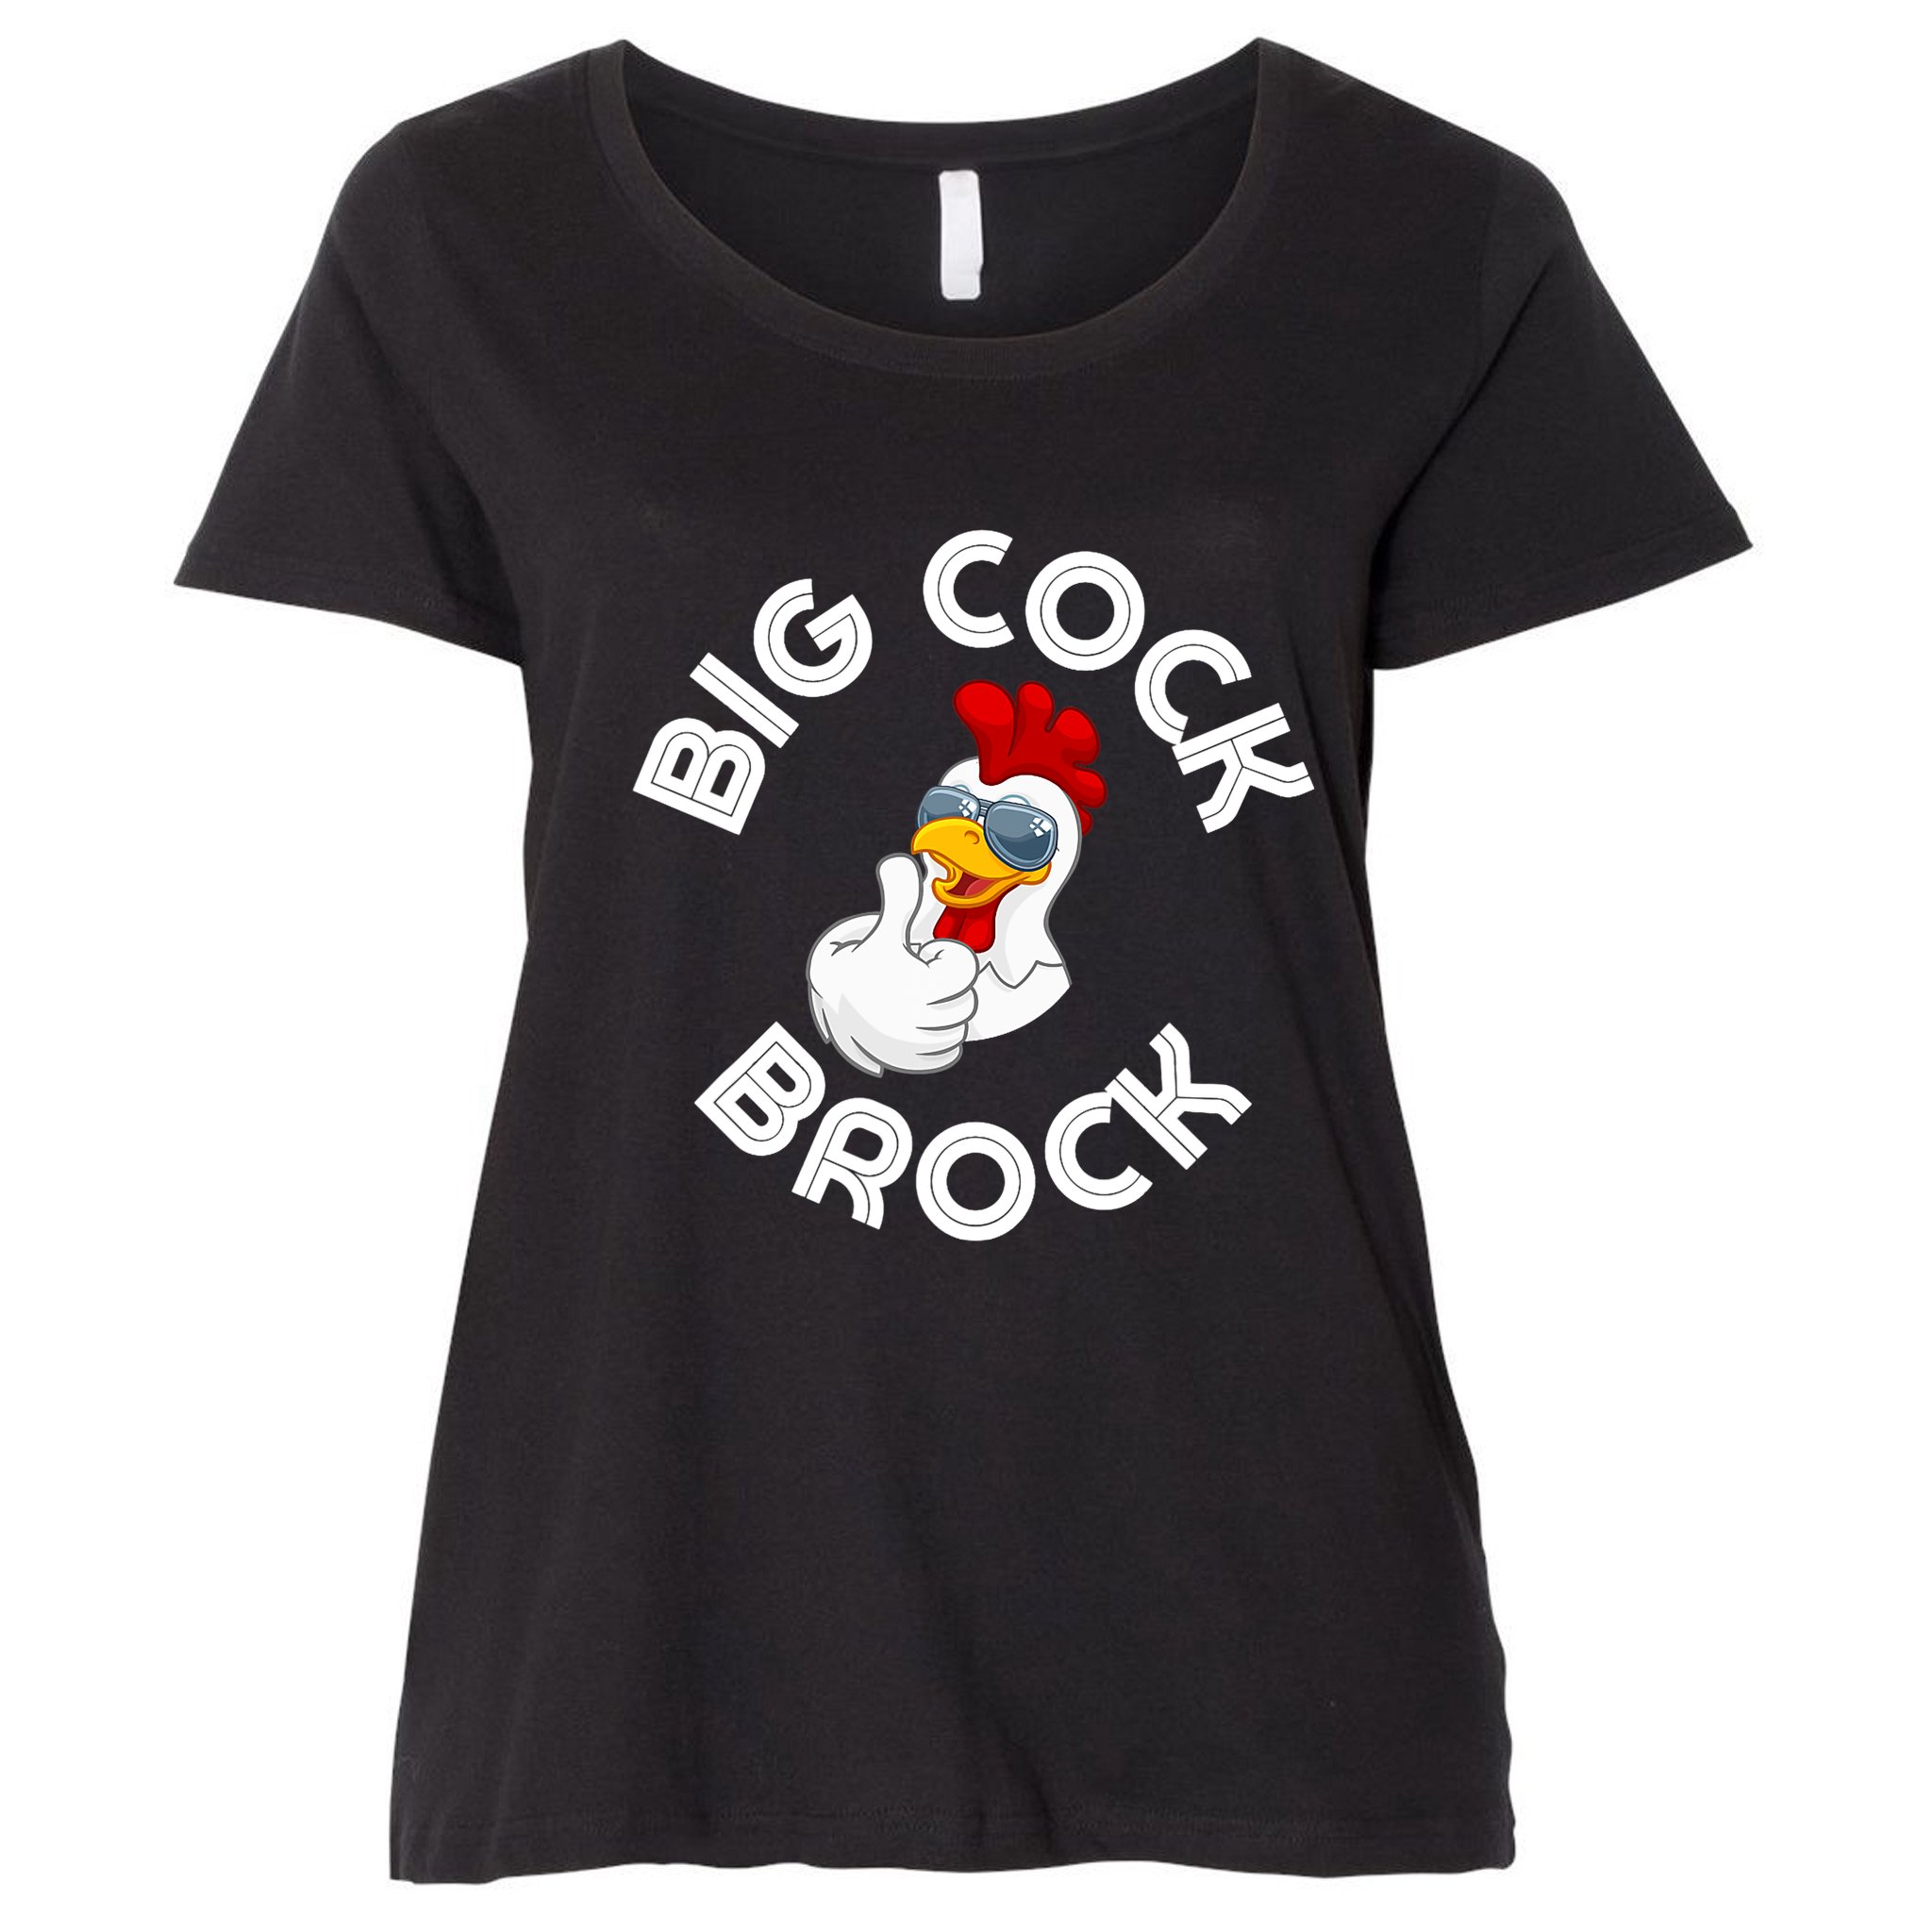 big cock brock merch